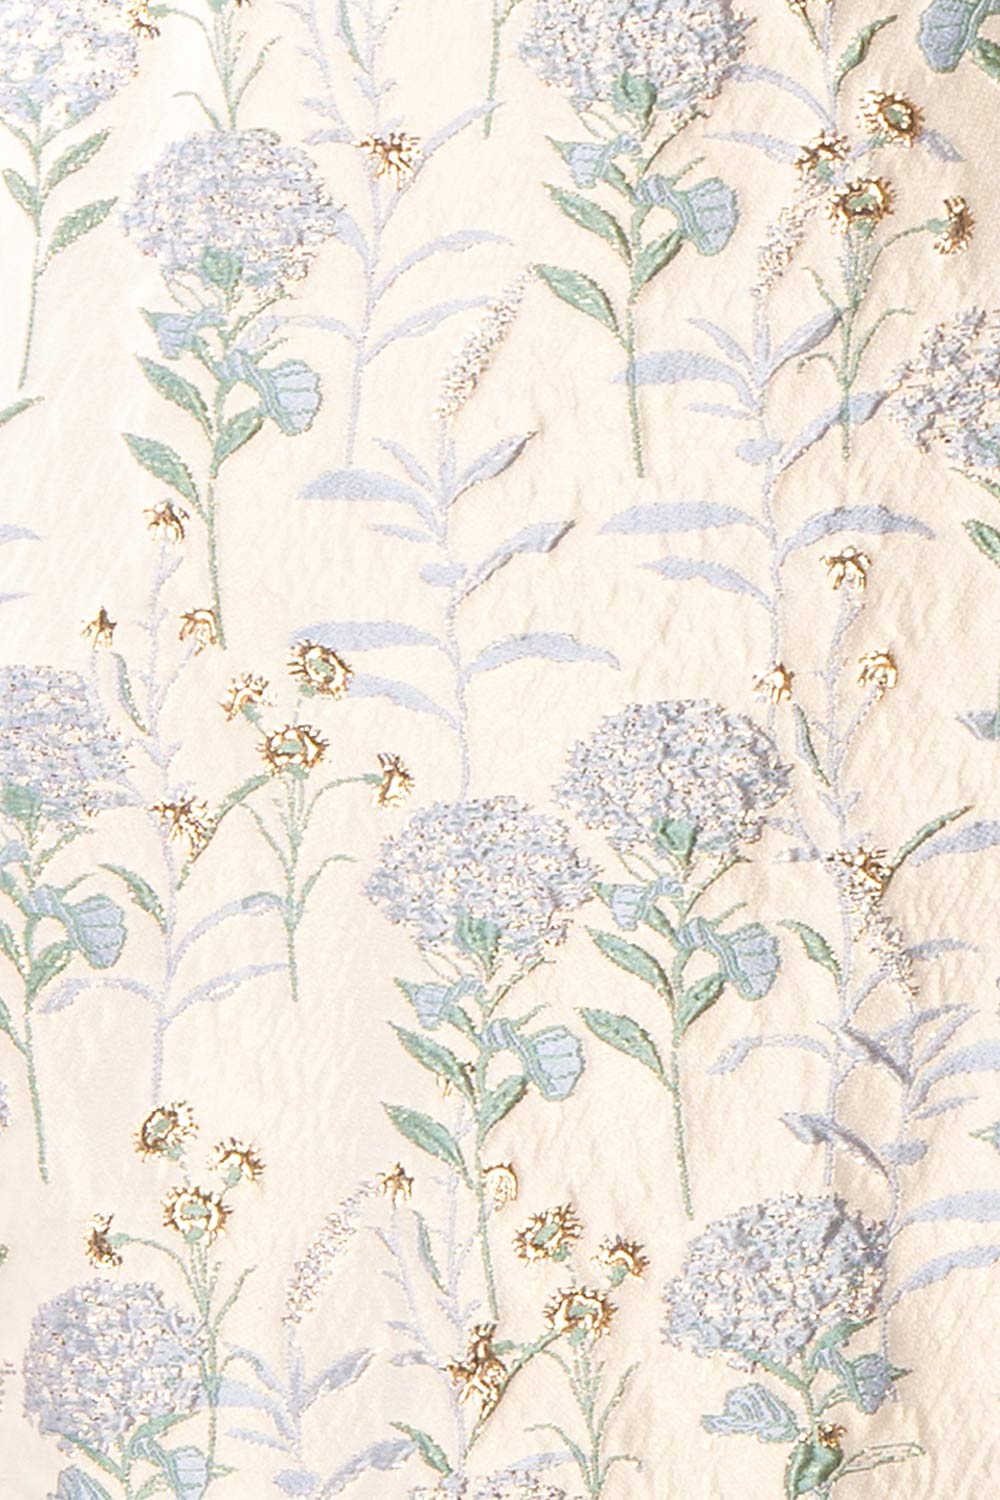 Zylara Floral Jacquard Midi Dress | Boutique 1861 fabric